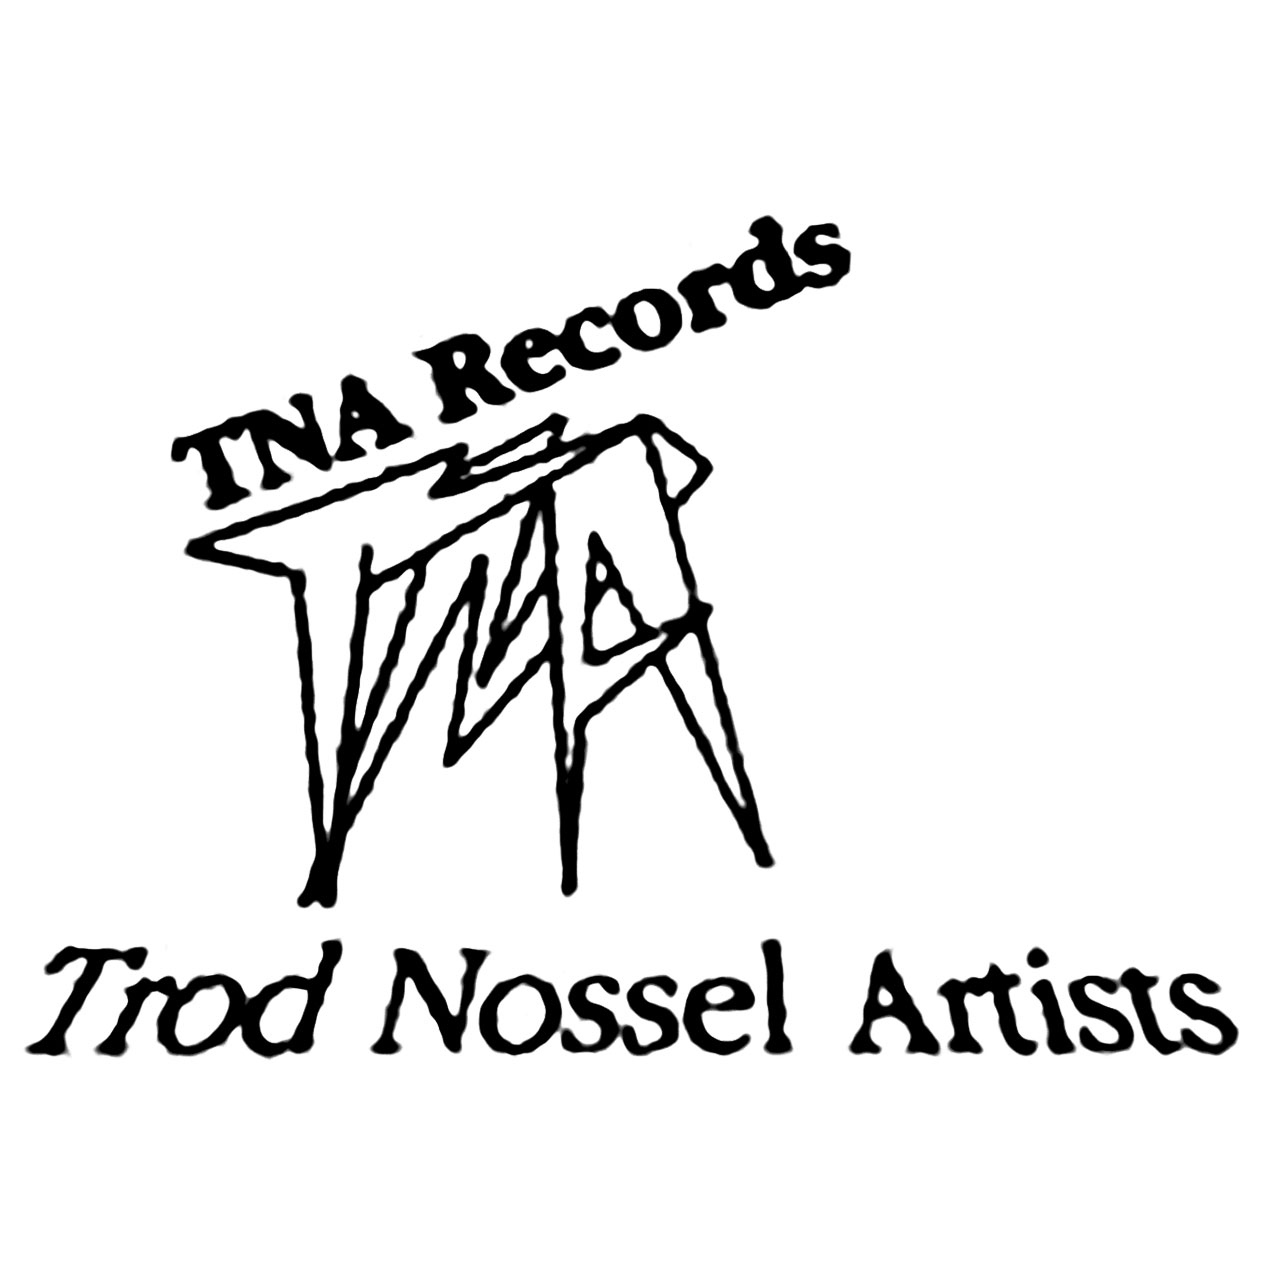 Trod-Nossel-Artists-TNA-Record-Label